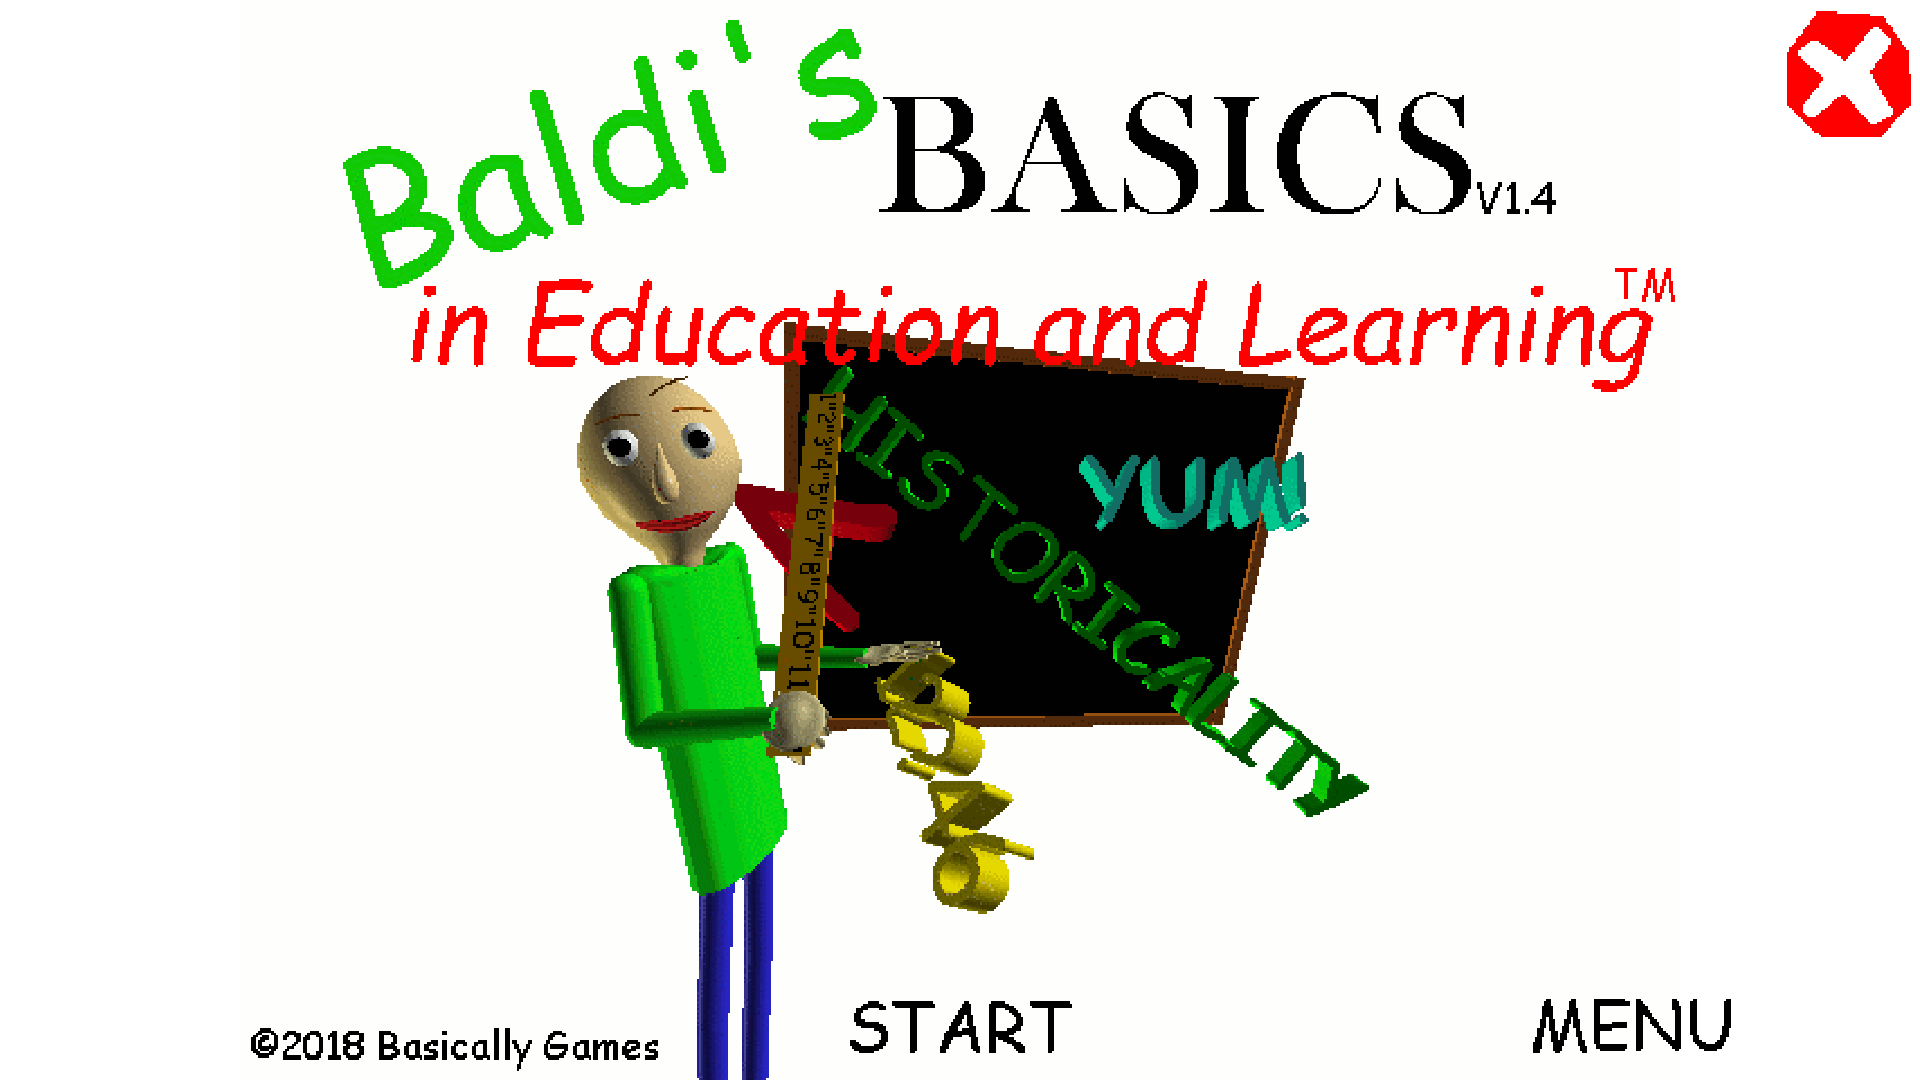 Baldi's Basics Classic Remastered RECREATION [V0.4.4] 